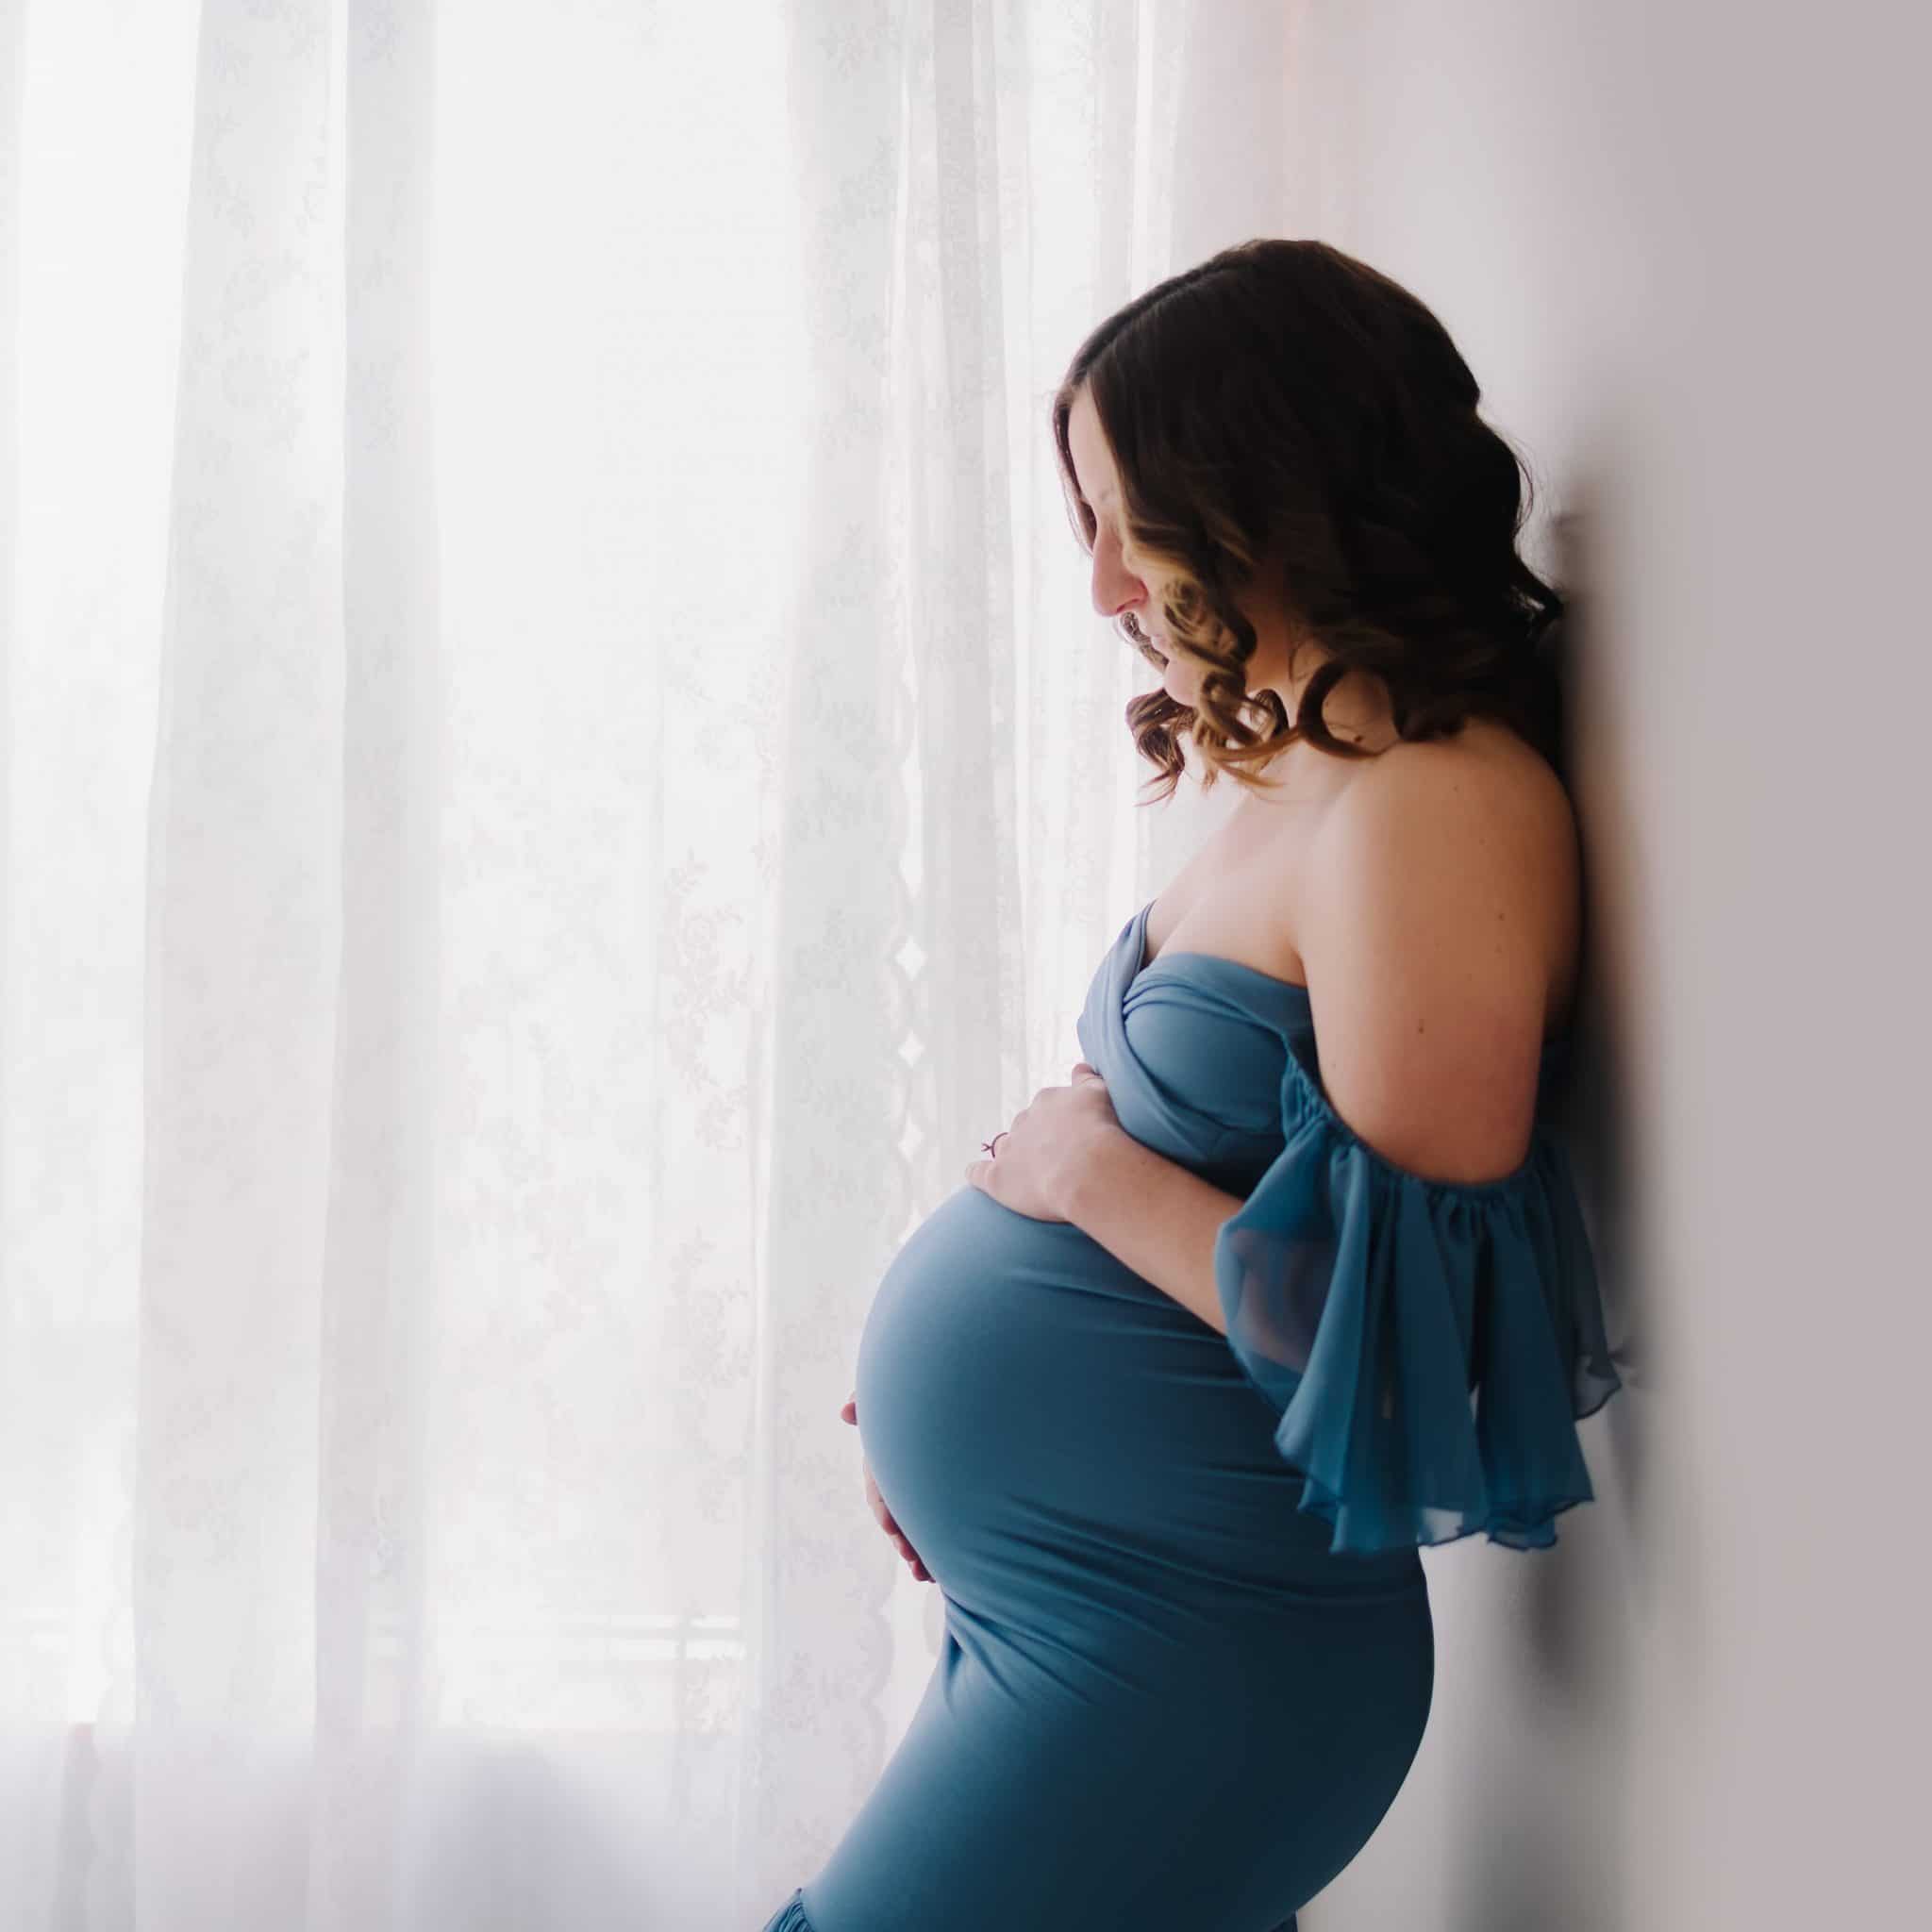 Minneapolis newborn maternity and family photographer